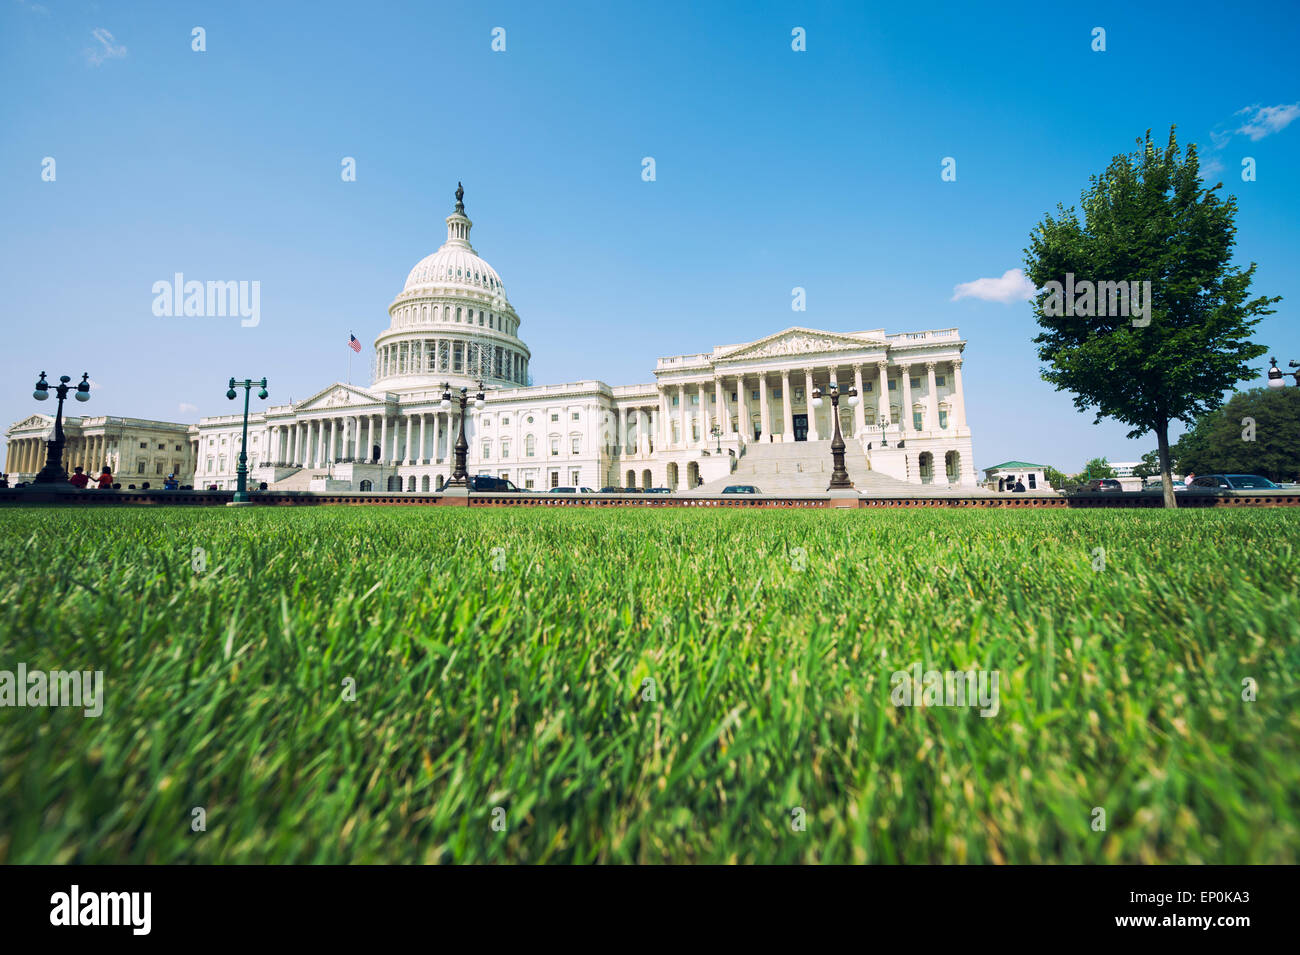 Capitol Building Washington DC USA vista panoramica con erba verde prato estivo Foto Stock